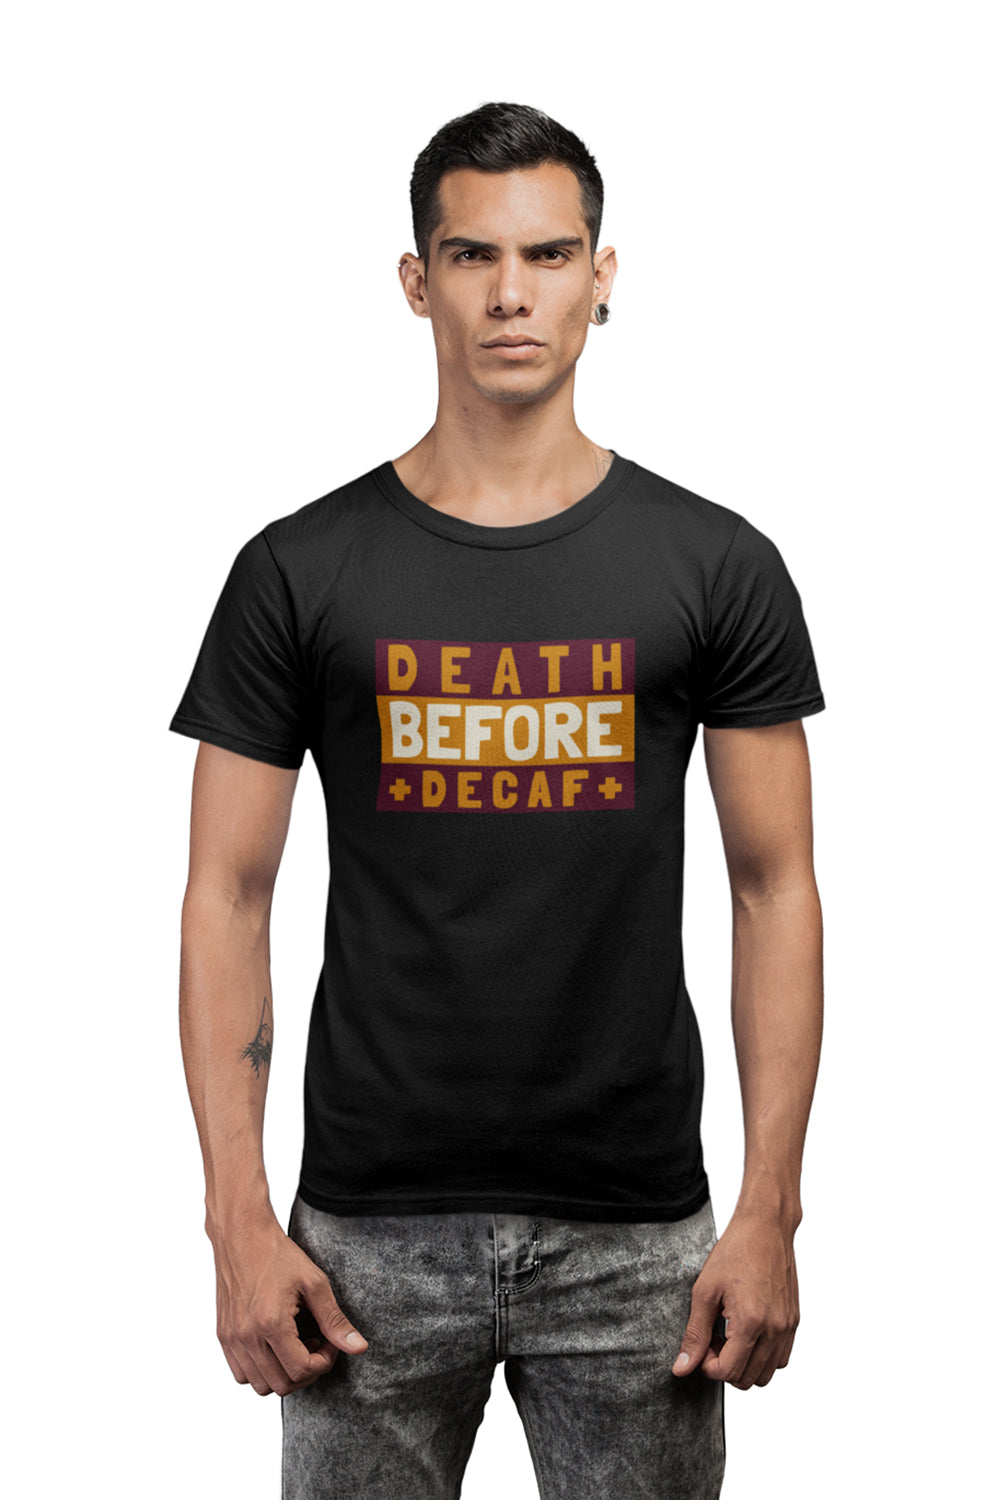 Death Before Decaf Graphic Printed Black Tshirt